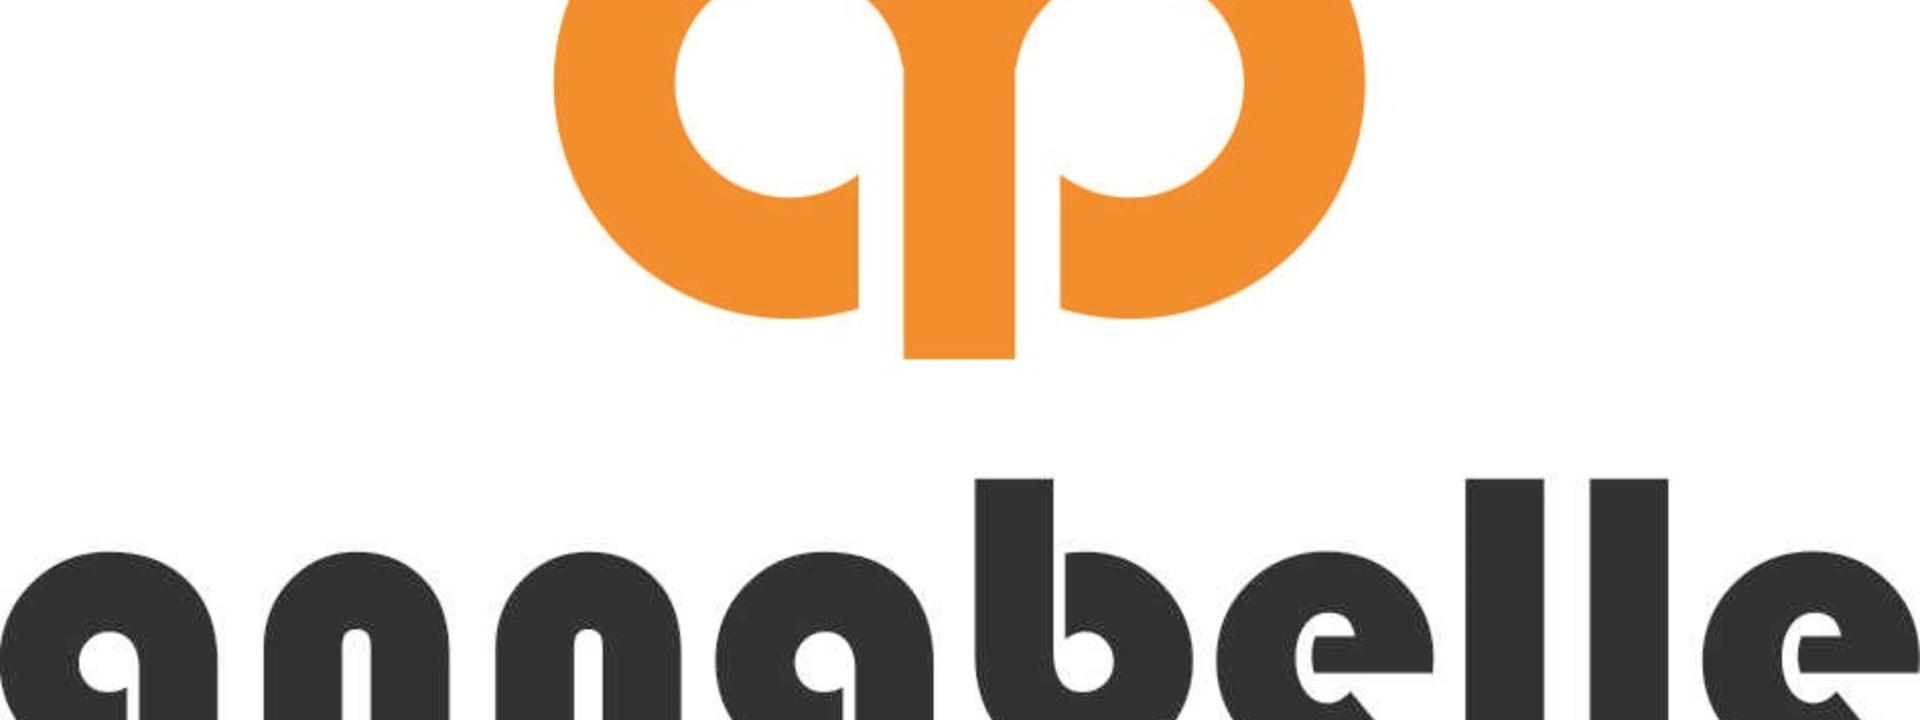 annabelle-logo.jpg